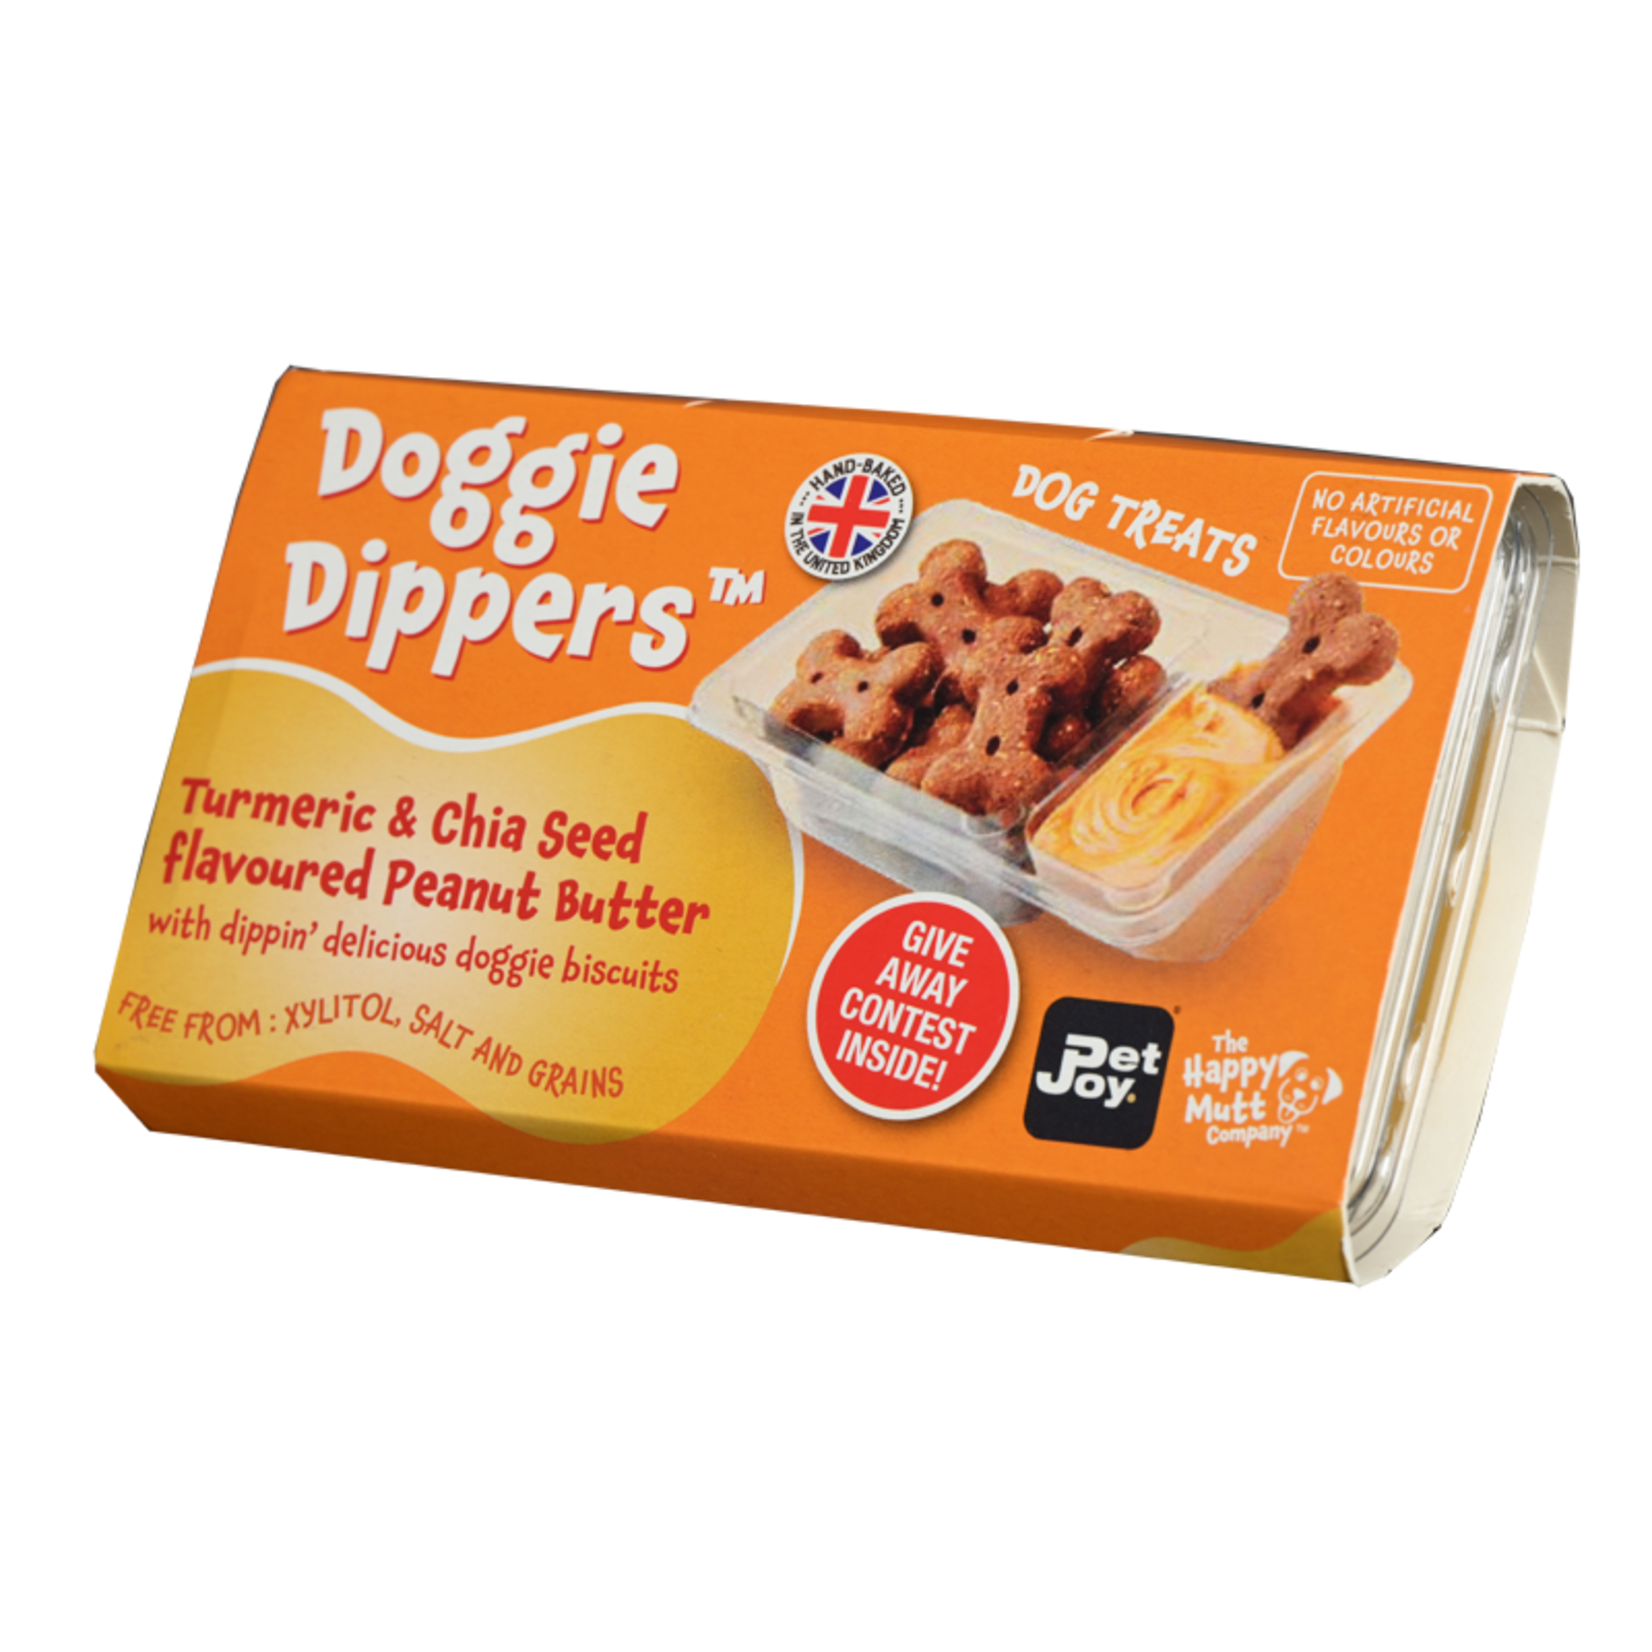 Doggie Dippers Pet Joy x Happy Mutt company - Doggie Dippers Tumeric & Chia